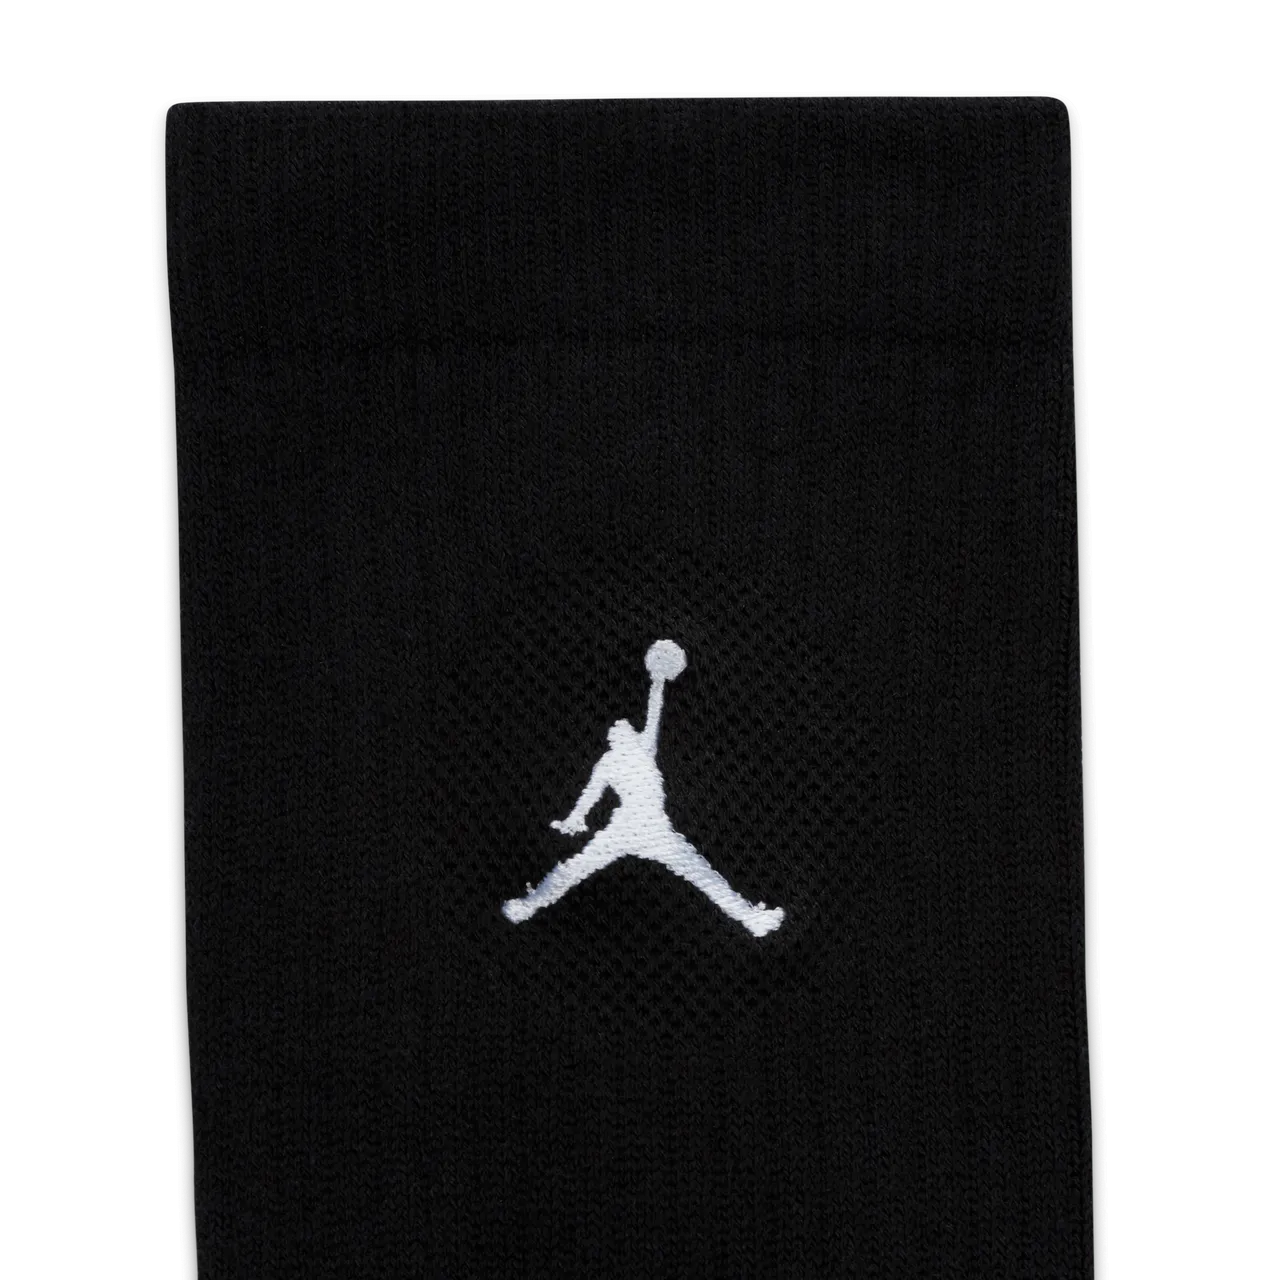 Jordan Everyday Crew Socks (3 pairs) - Black - Polyester